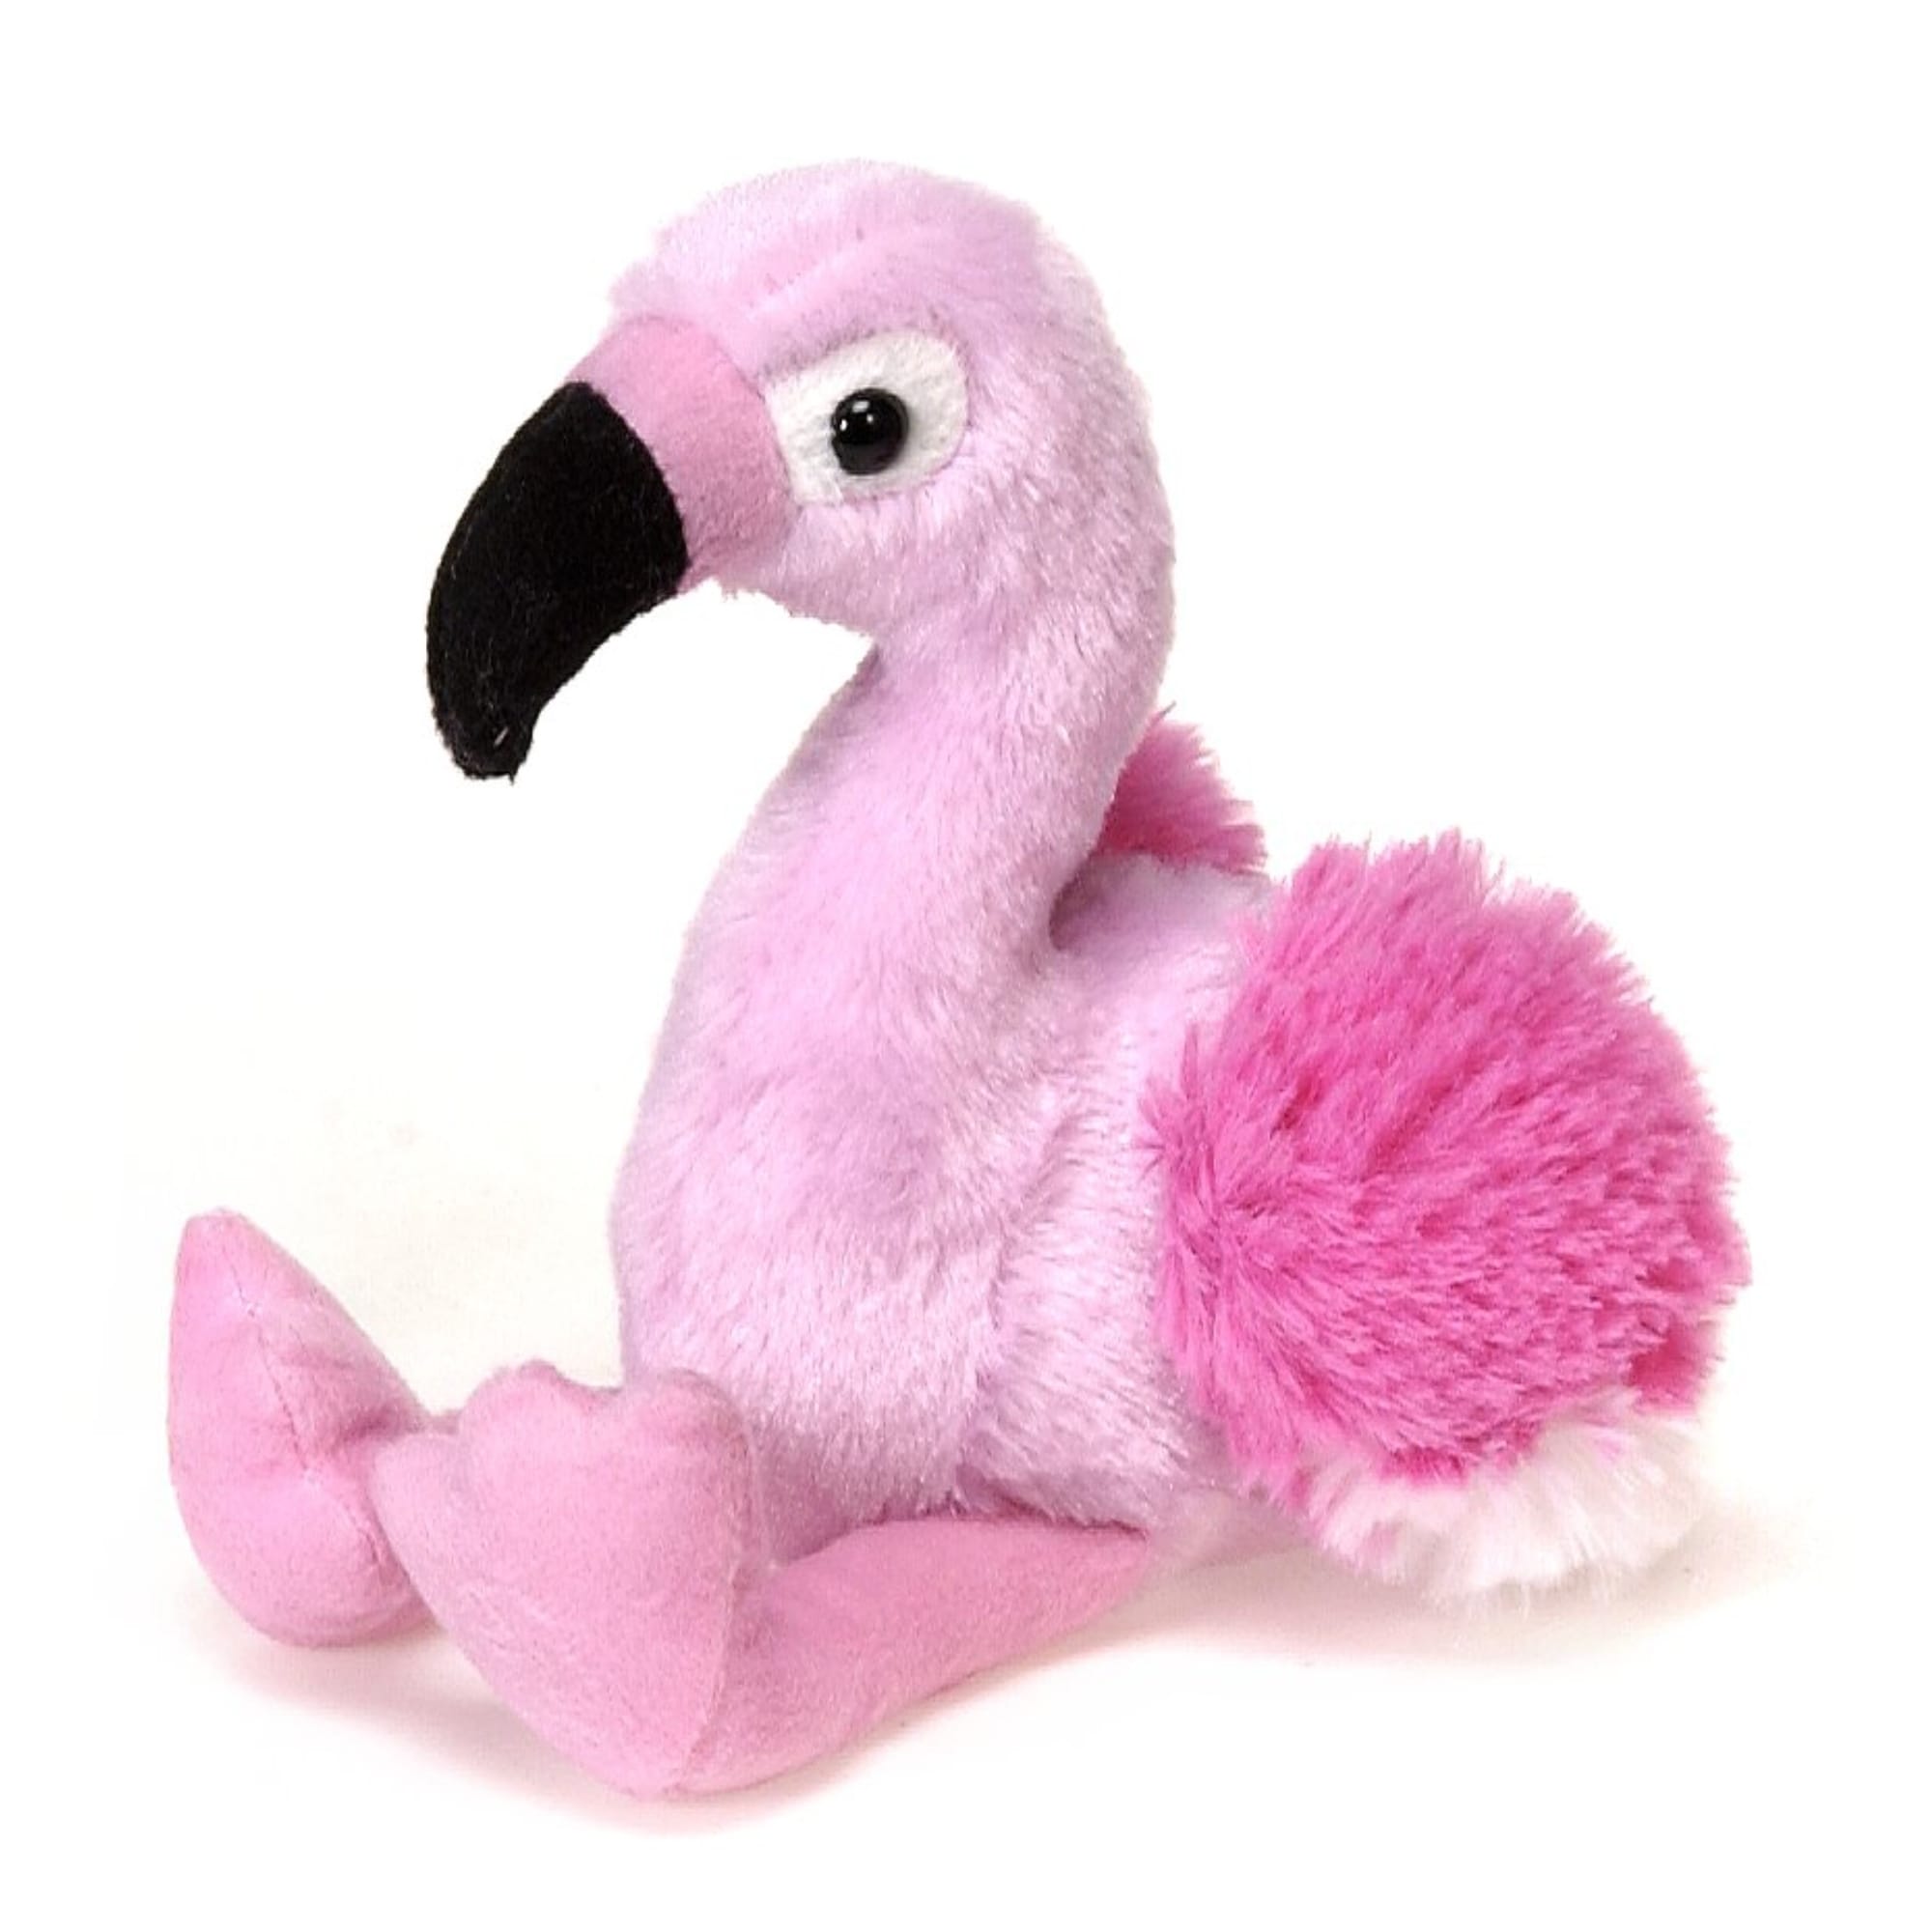 pink flamingo soft toy